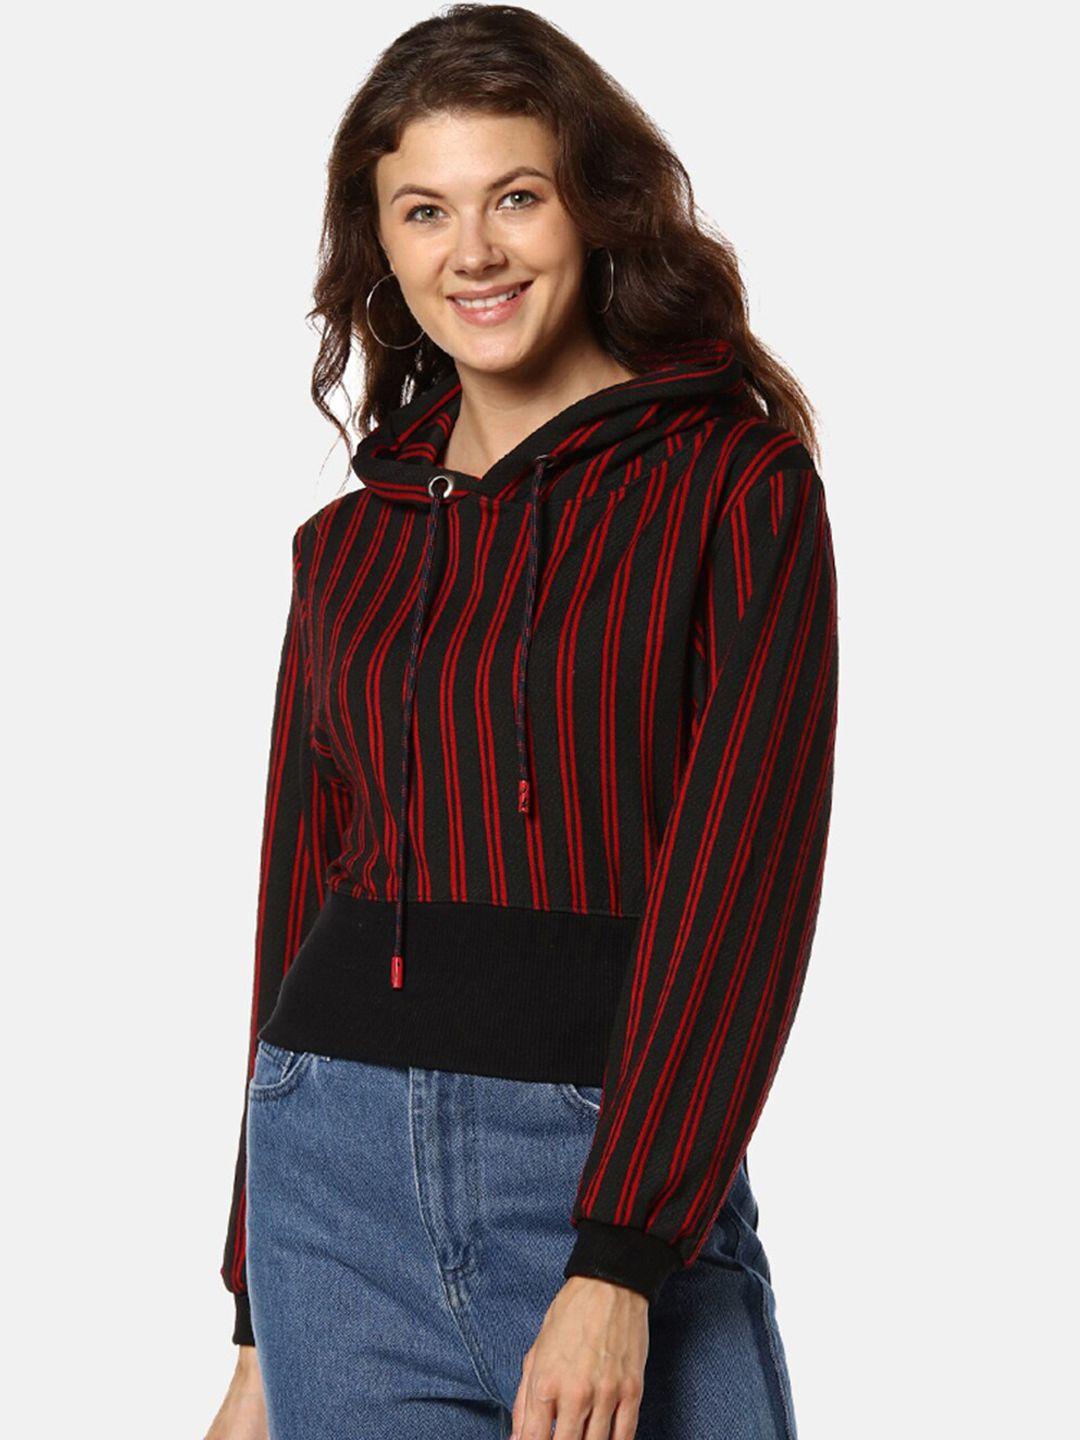 campus sutra women red & black striped hooded sweatshirt